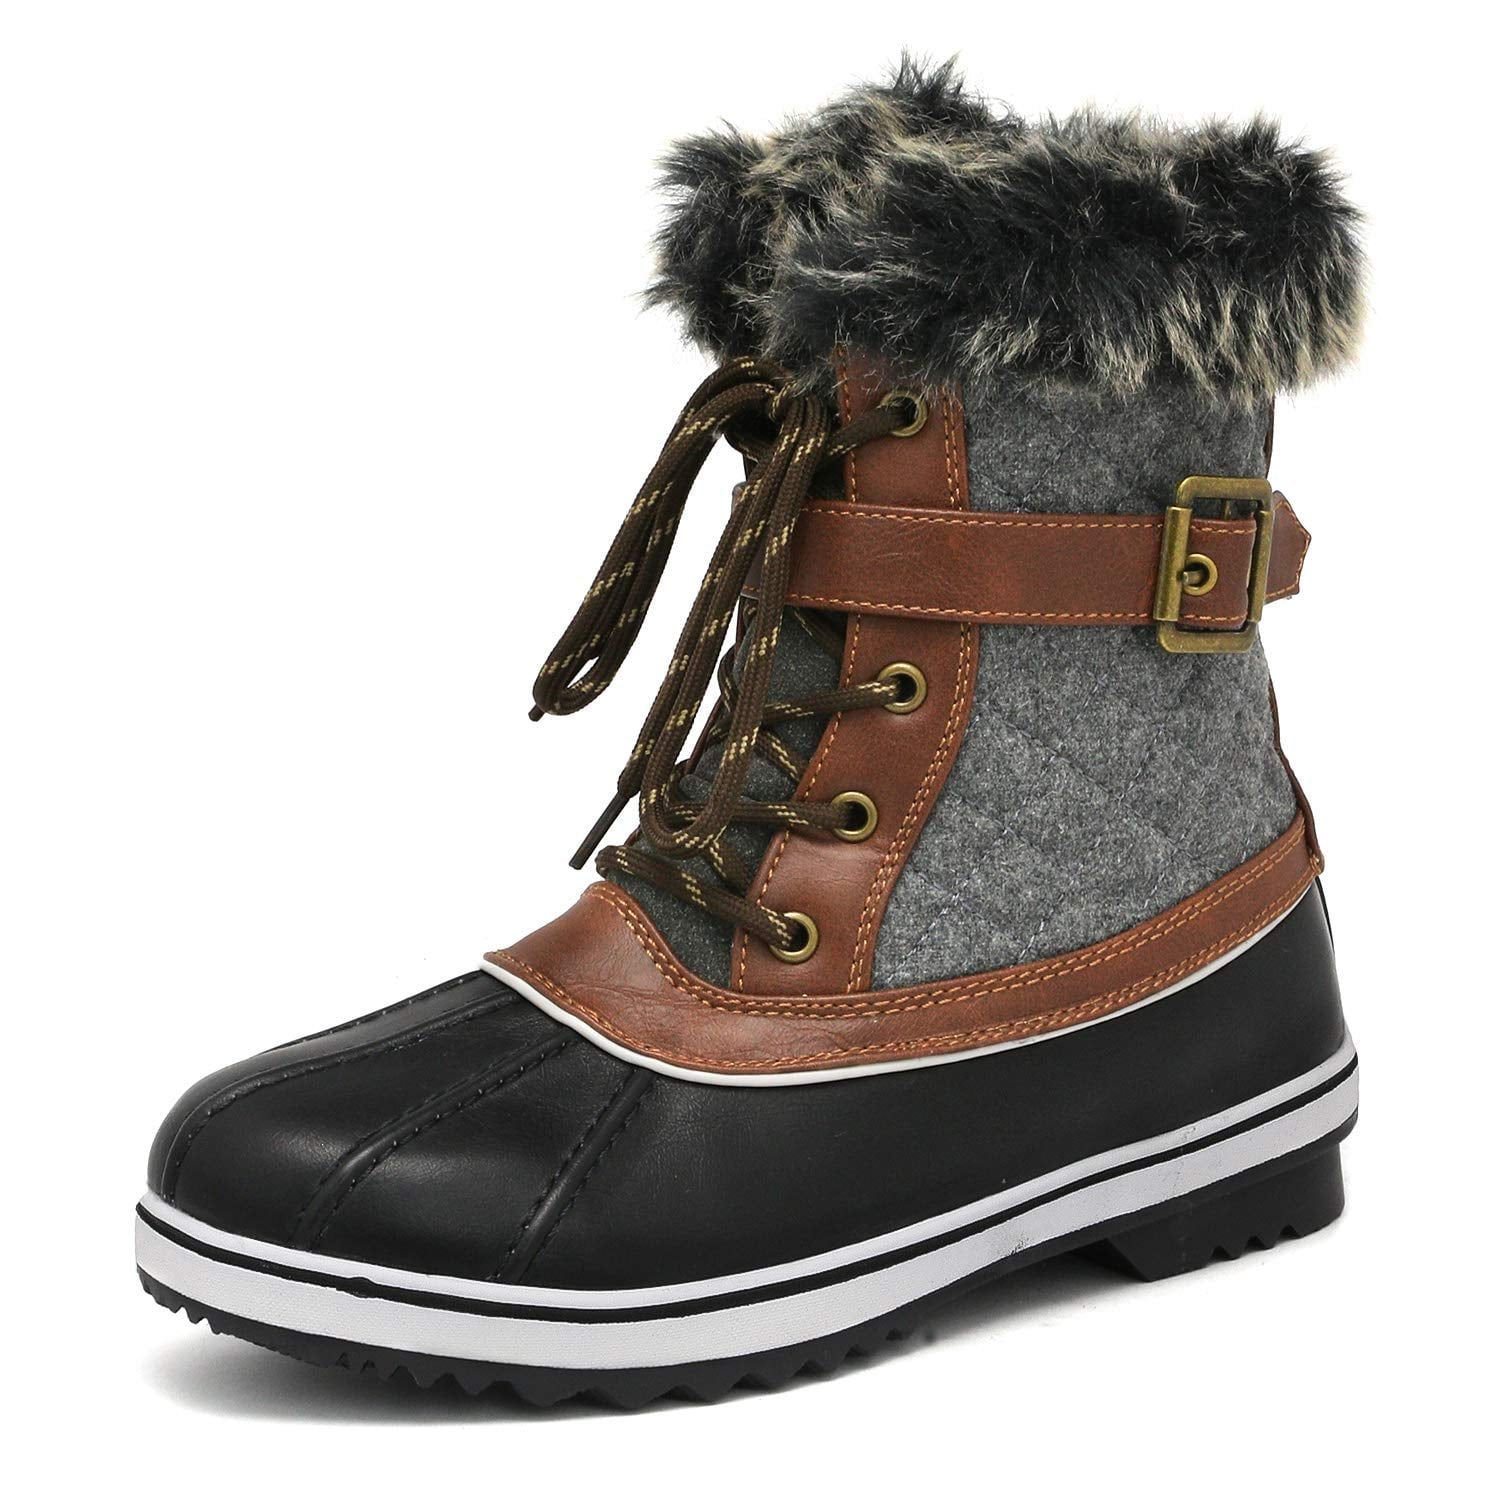 classy snow boots